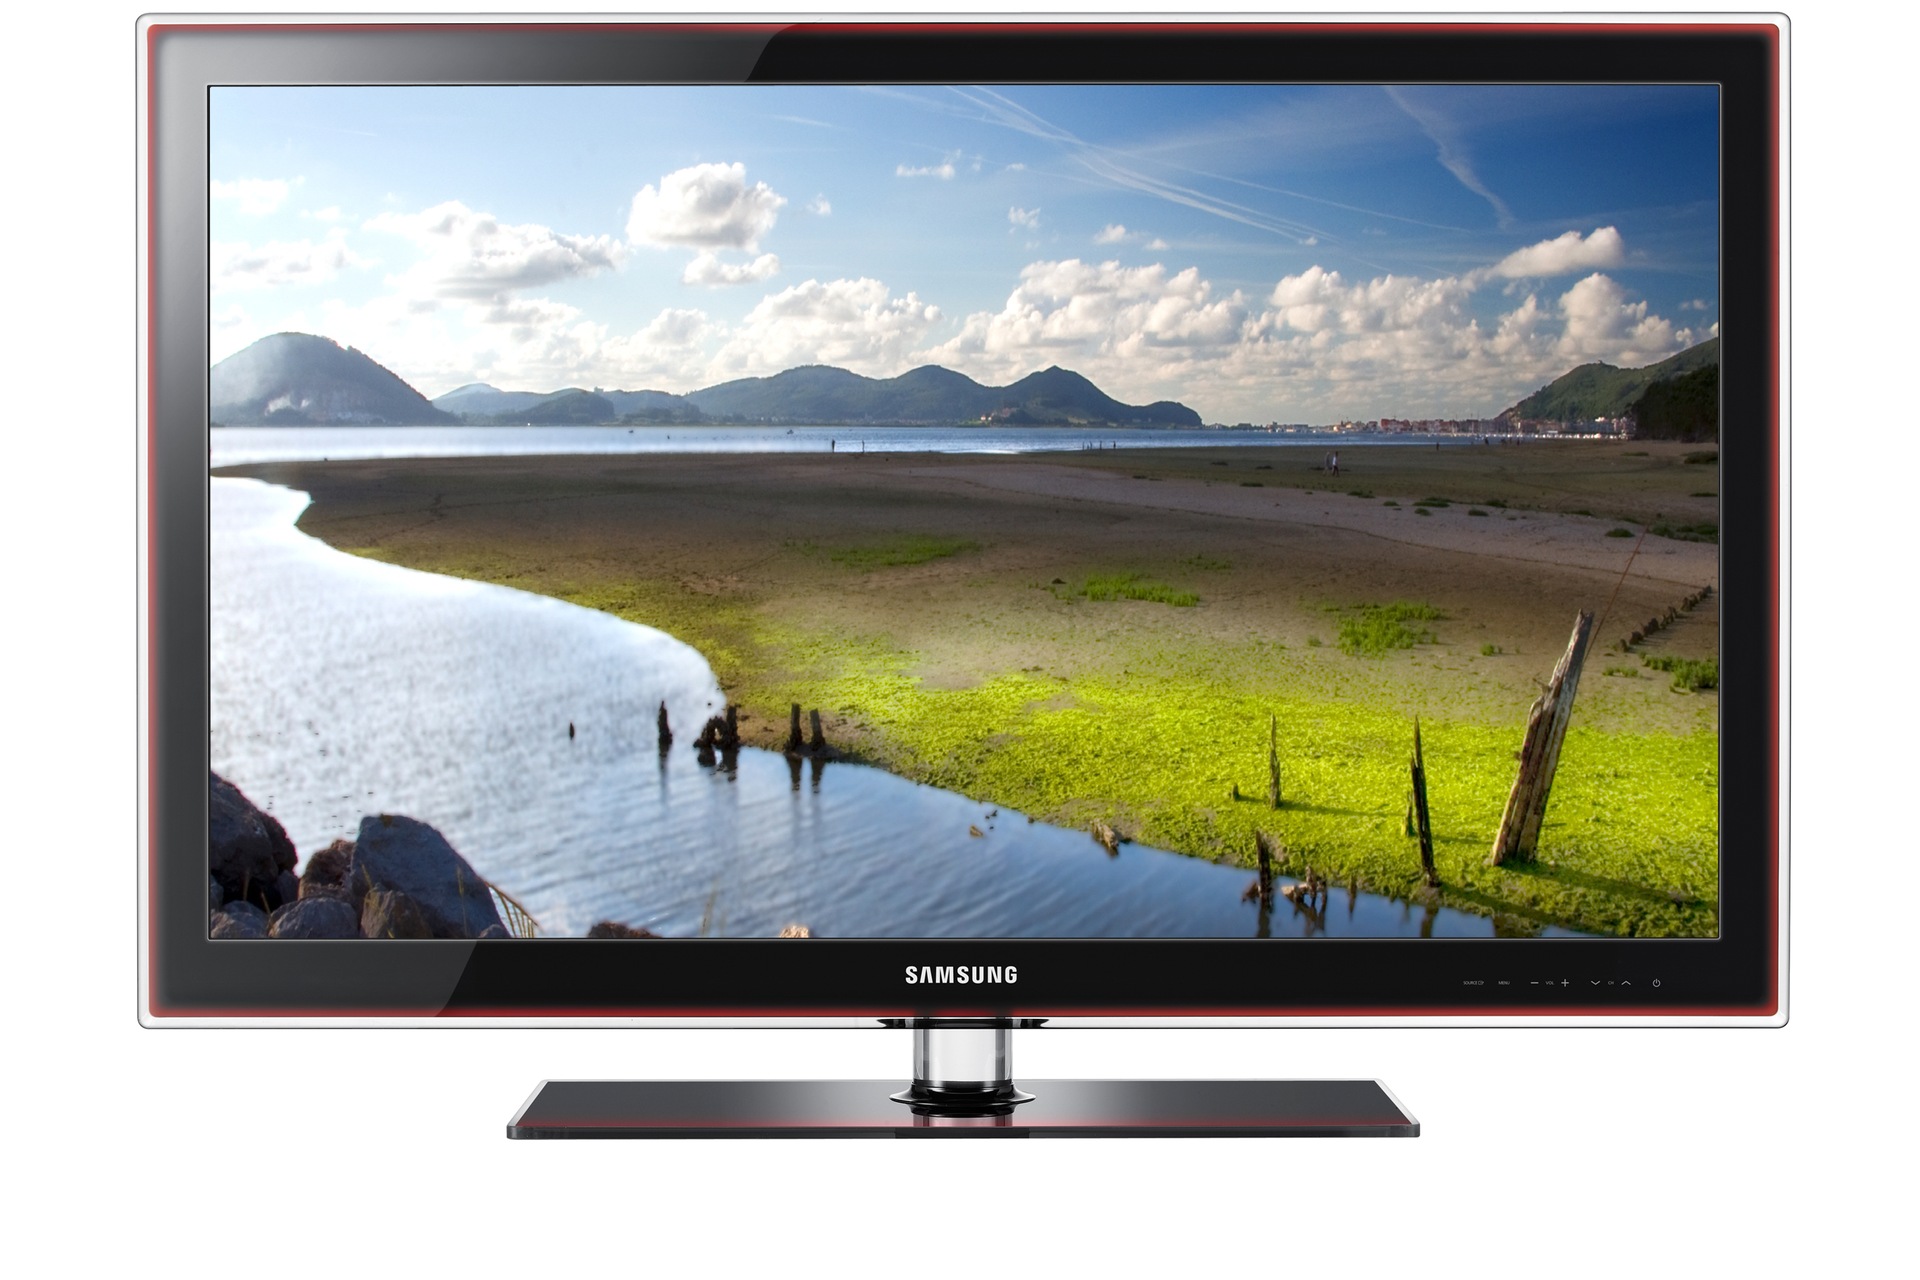 Надо купить телевизор. Samsung ue40d5000. Телевизор Samsung ue32d5000 32". Телевизор самсунг 50 дюймов. Телевизор самсунг модель ue40d5000pw.